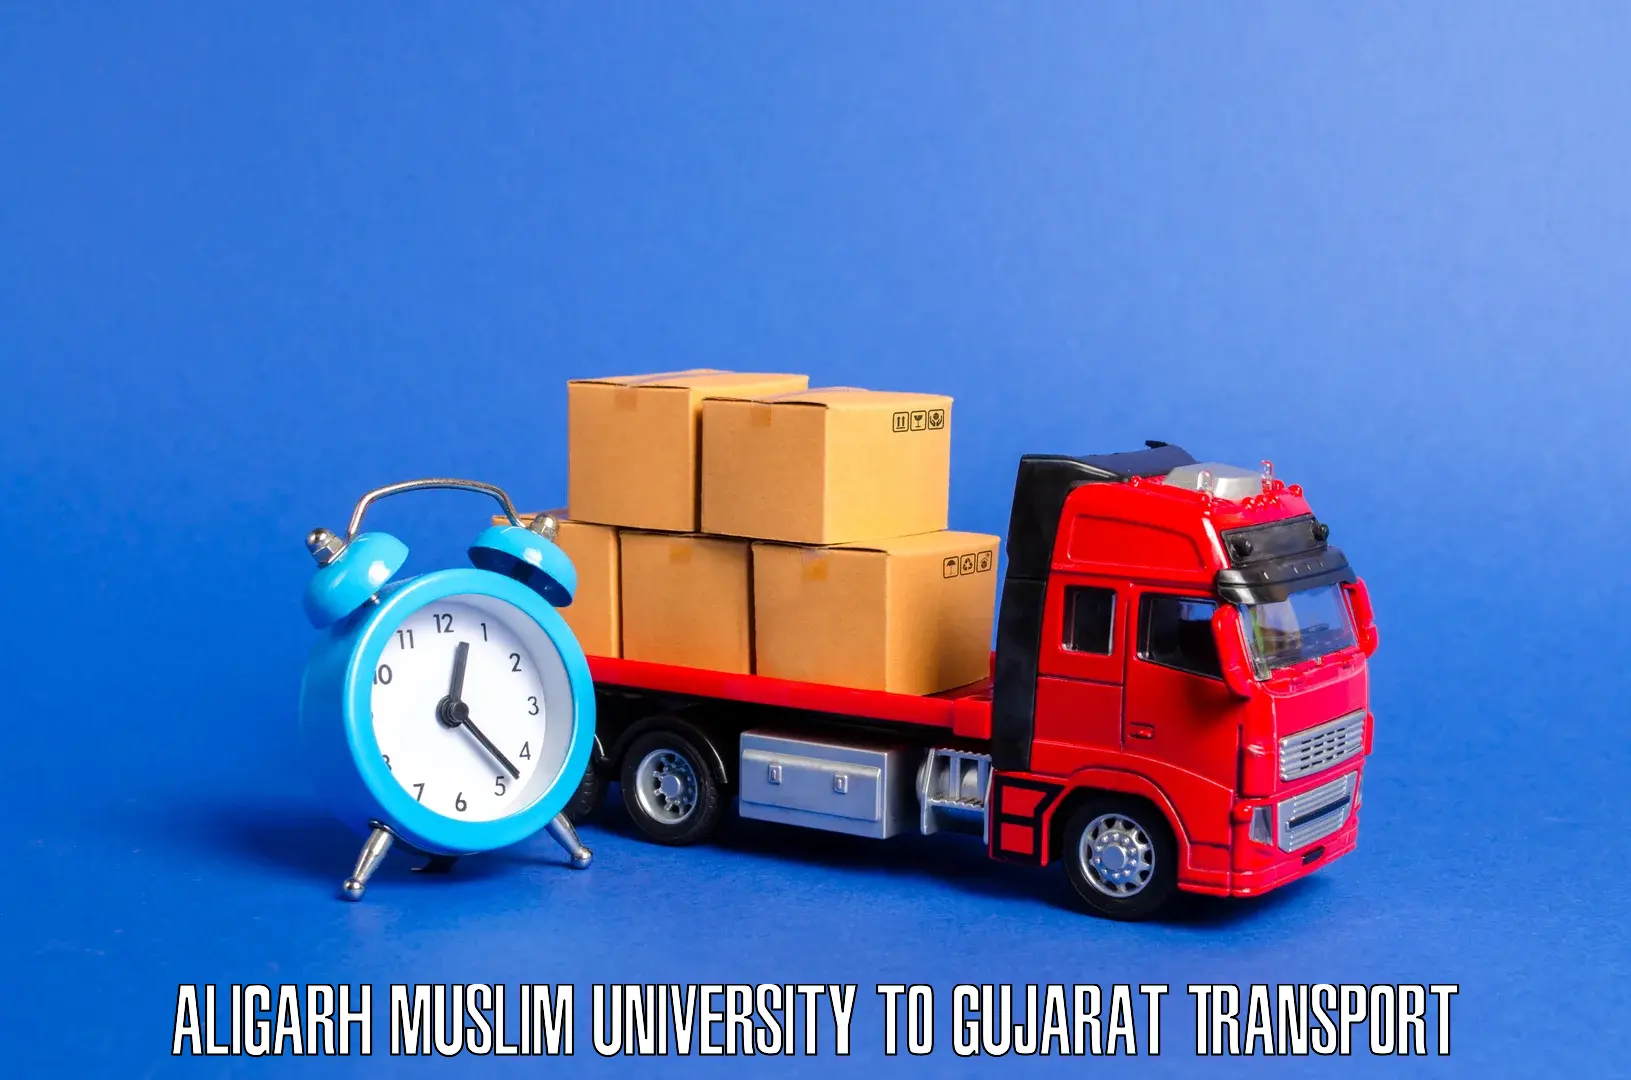 Shipping services in Aligarh Muslim University to IIIT Surat